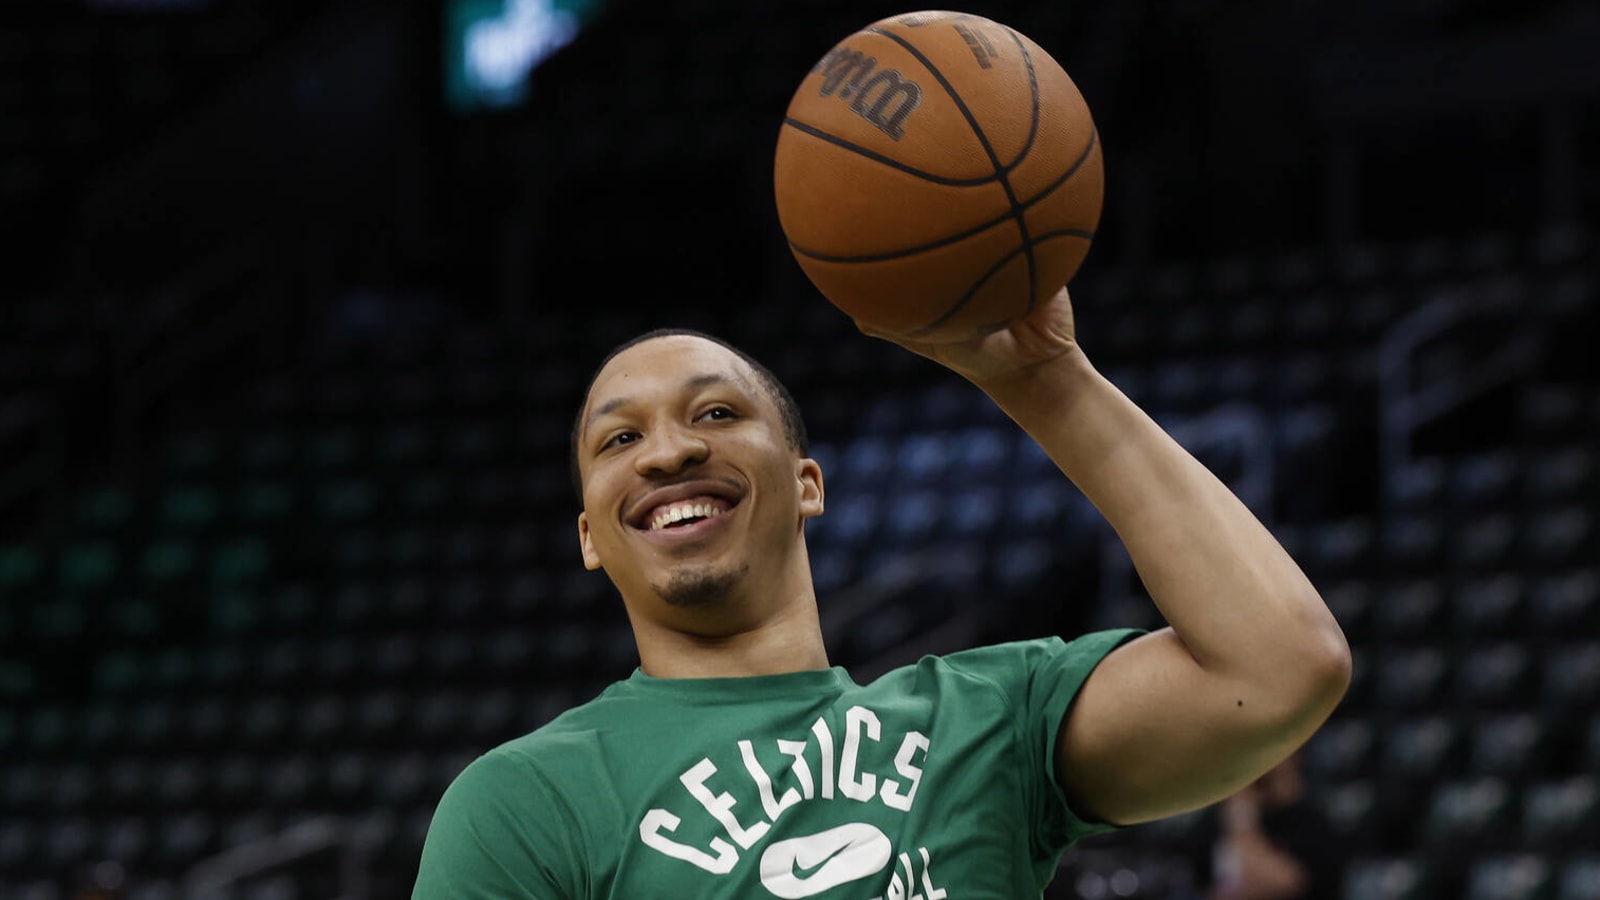 Watch: Celtics' Williams hilariously infiltrates Bucks’ huddle